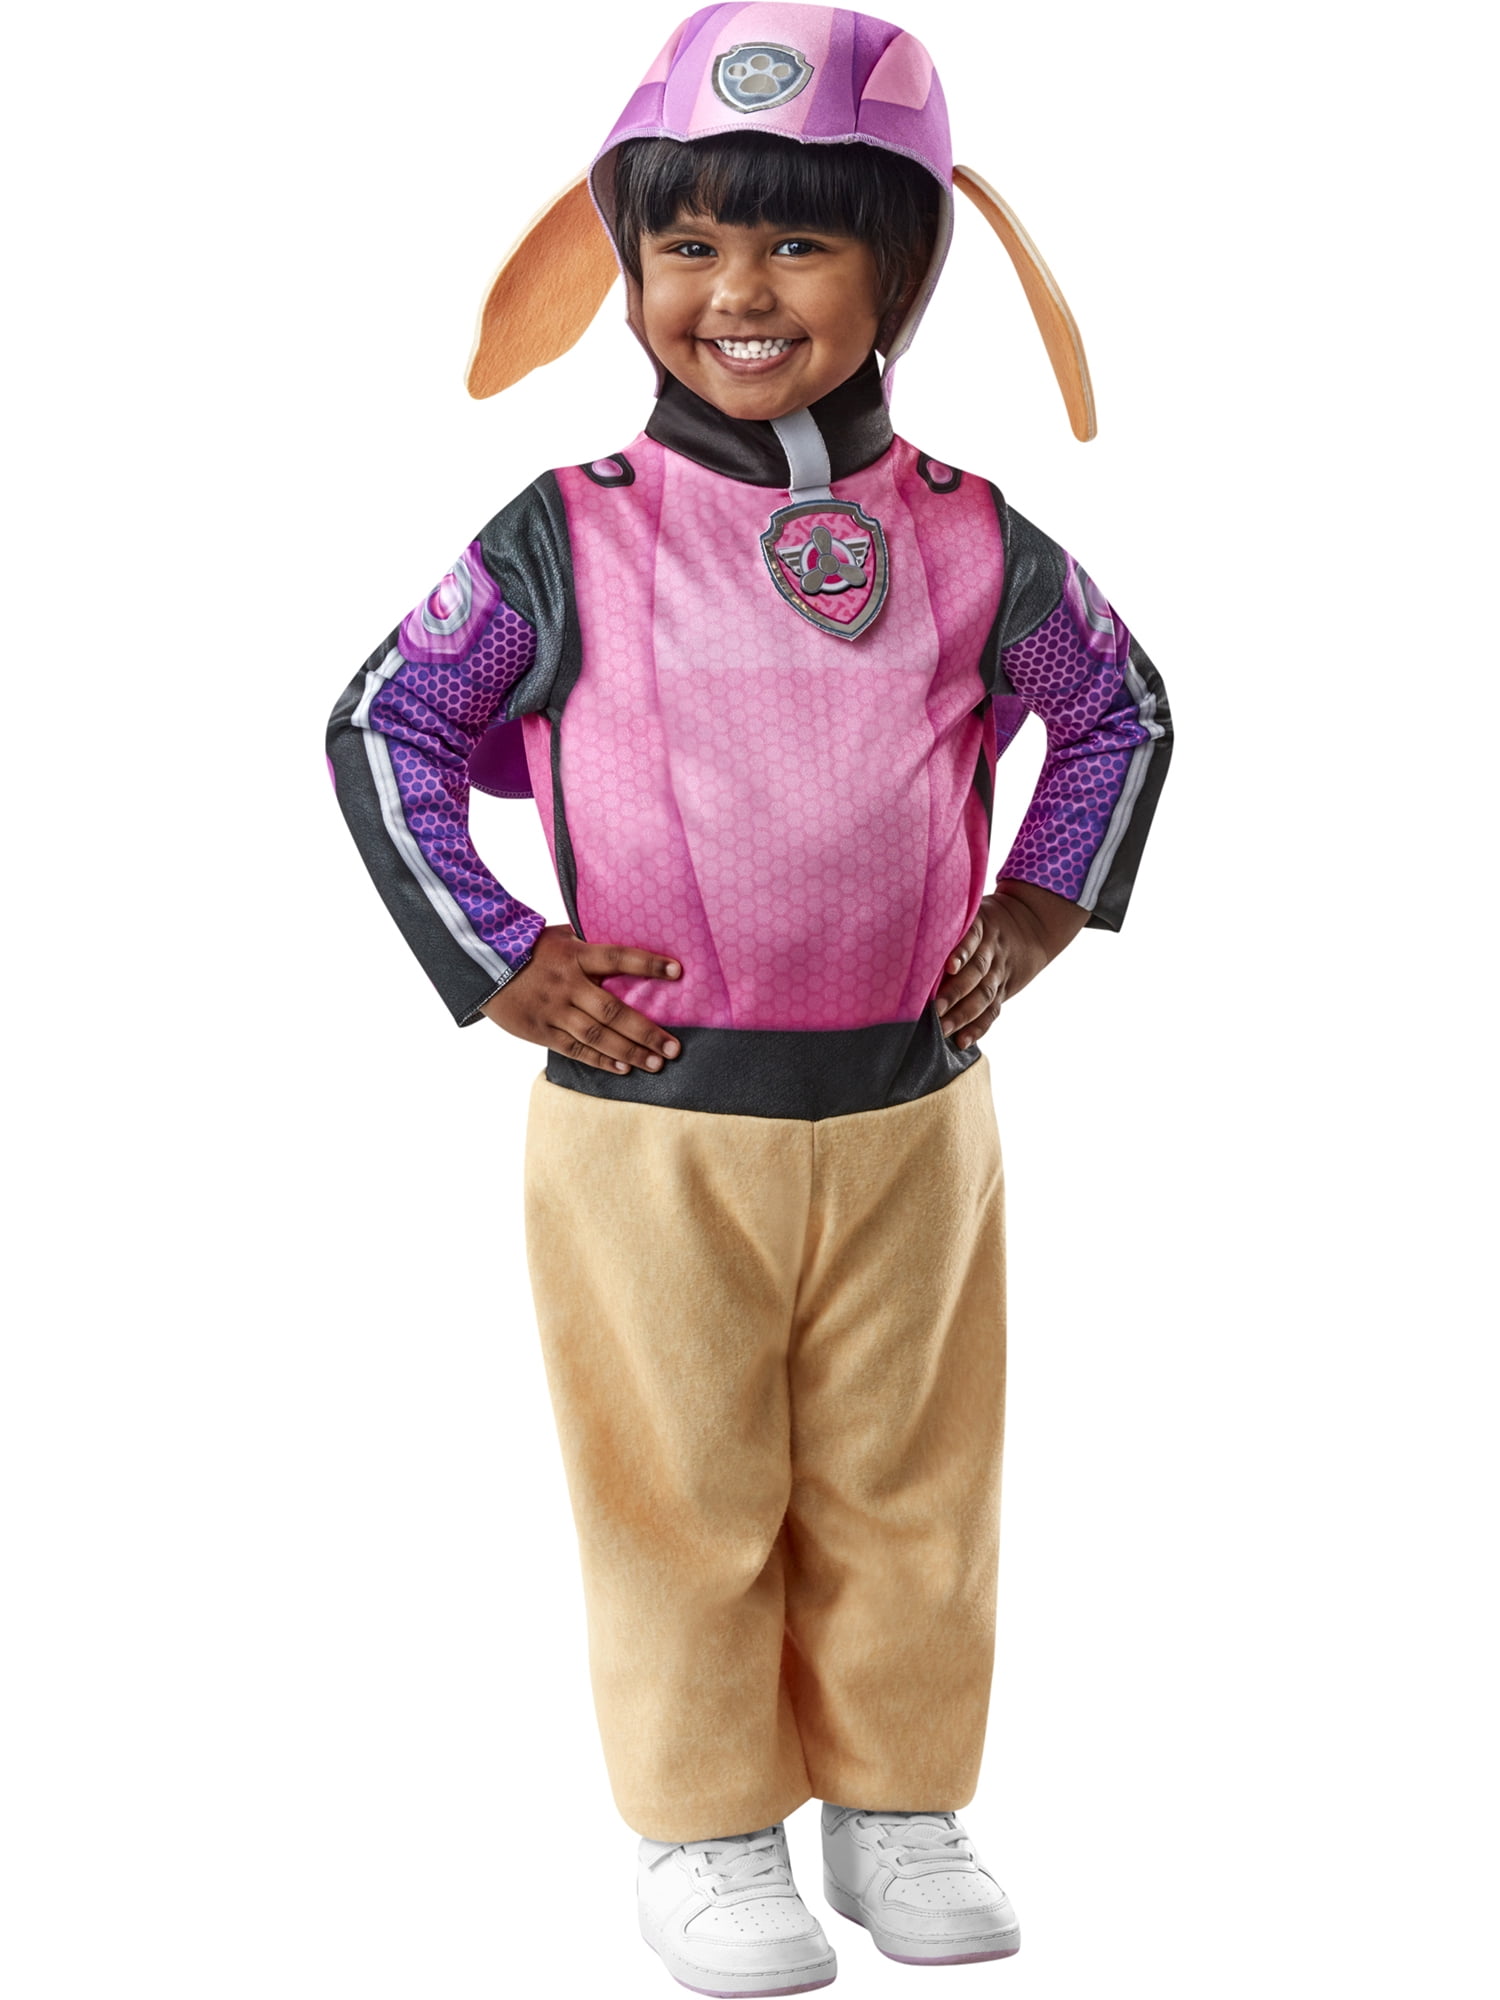 Paw Patrol The Movie: Skye Child Costume 